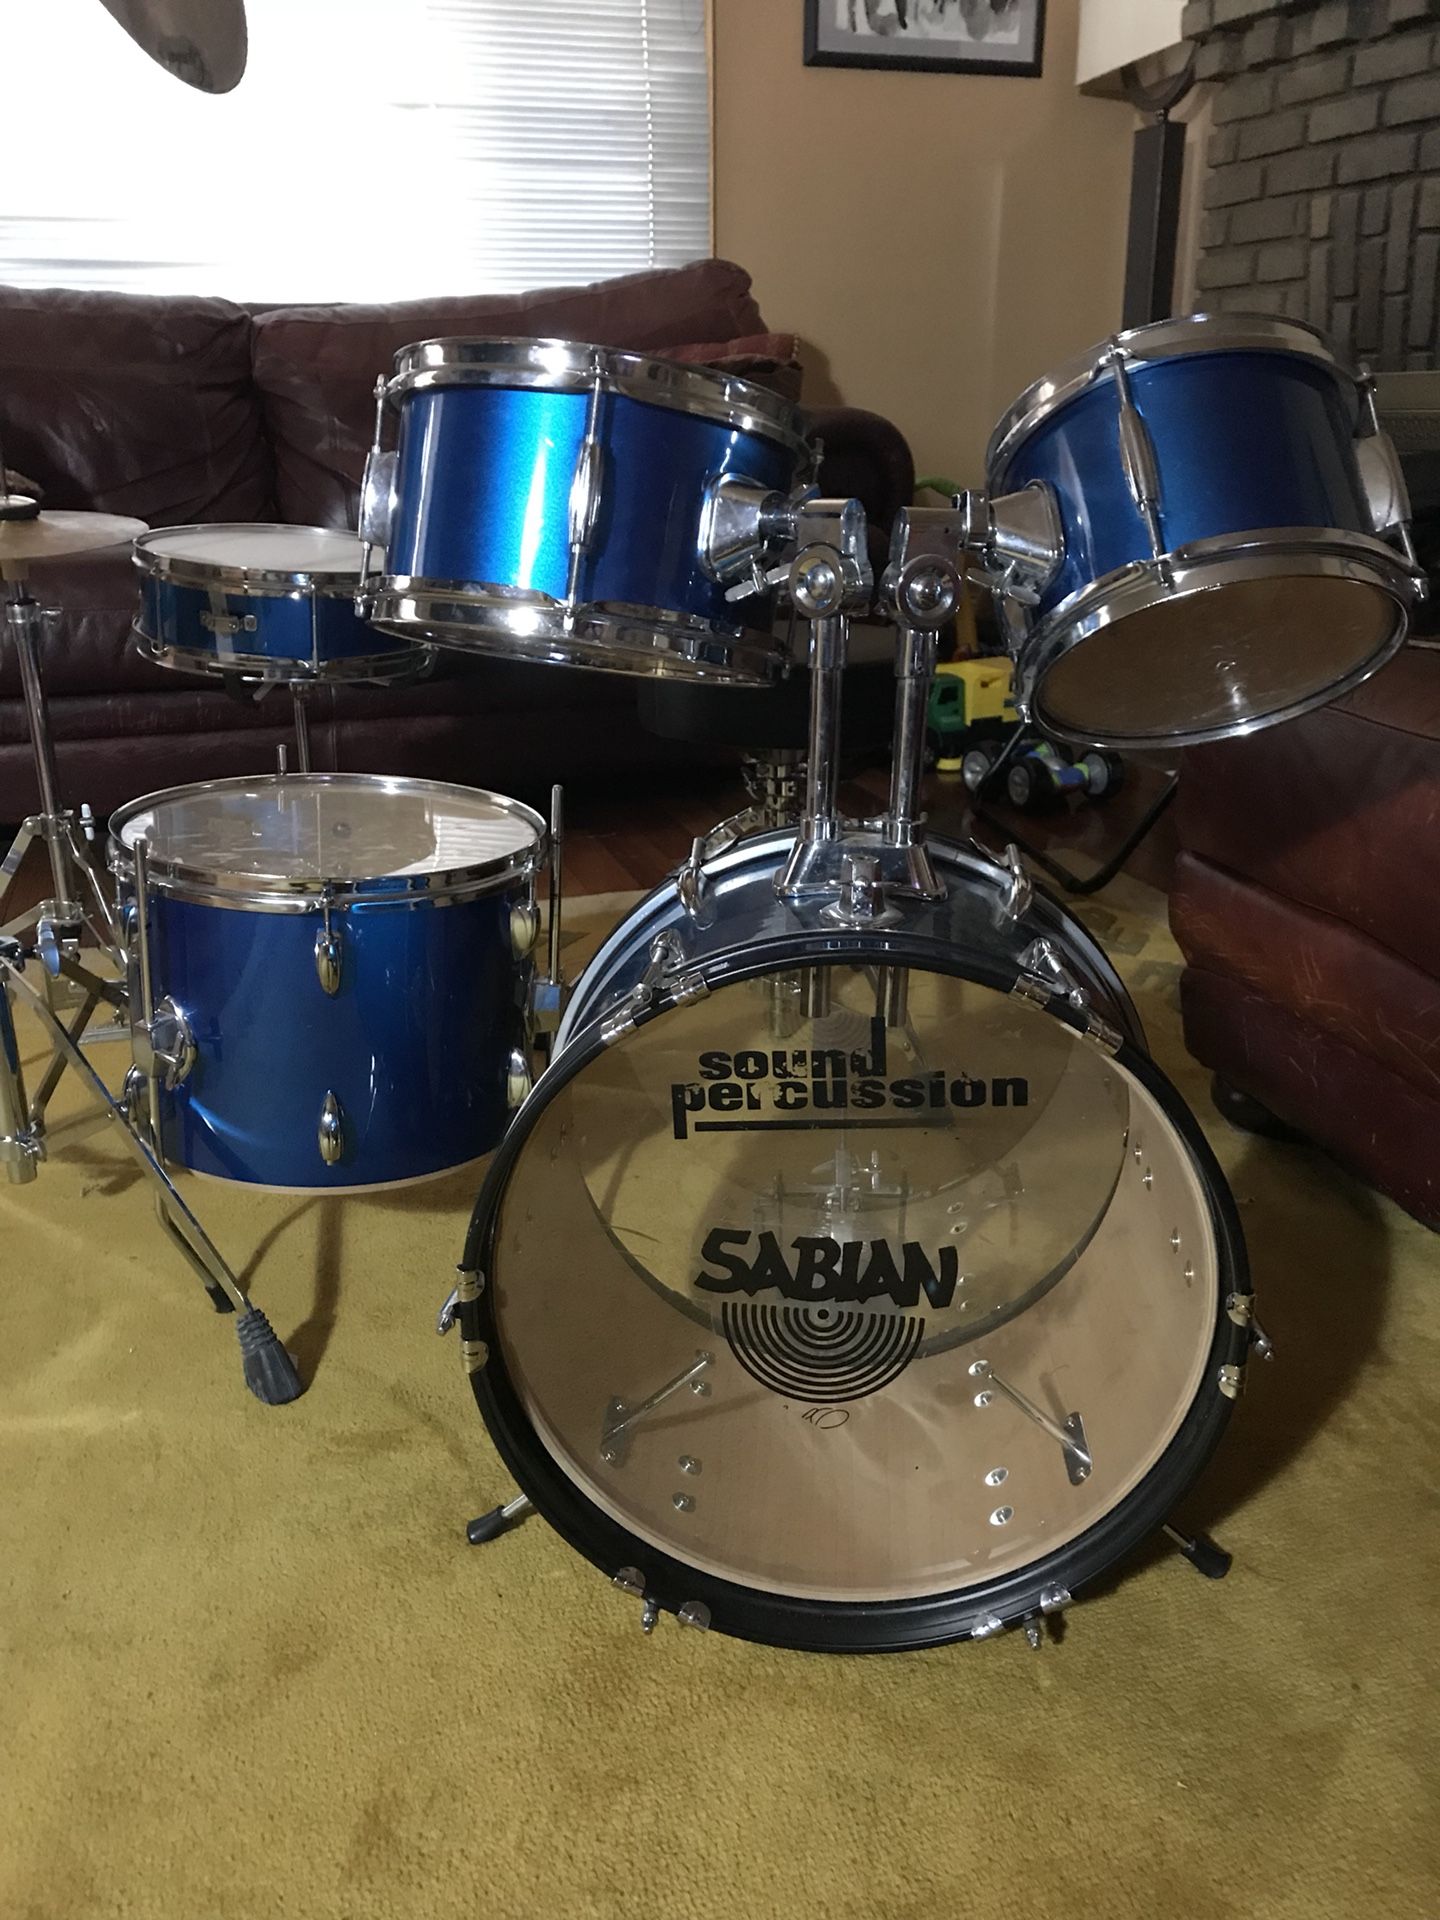 Sabian drum set